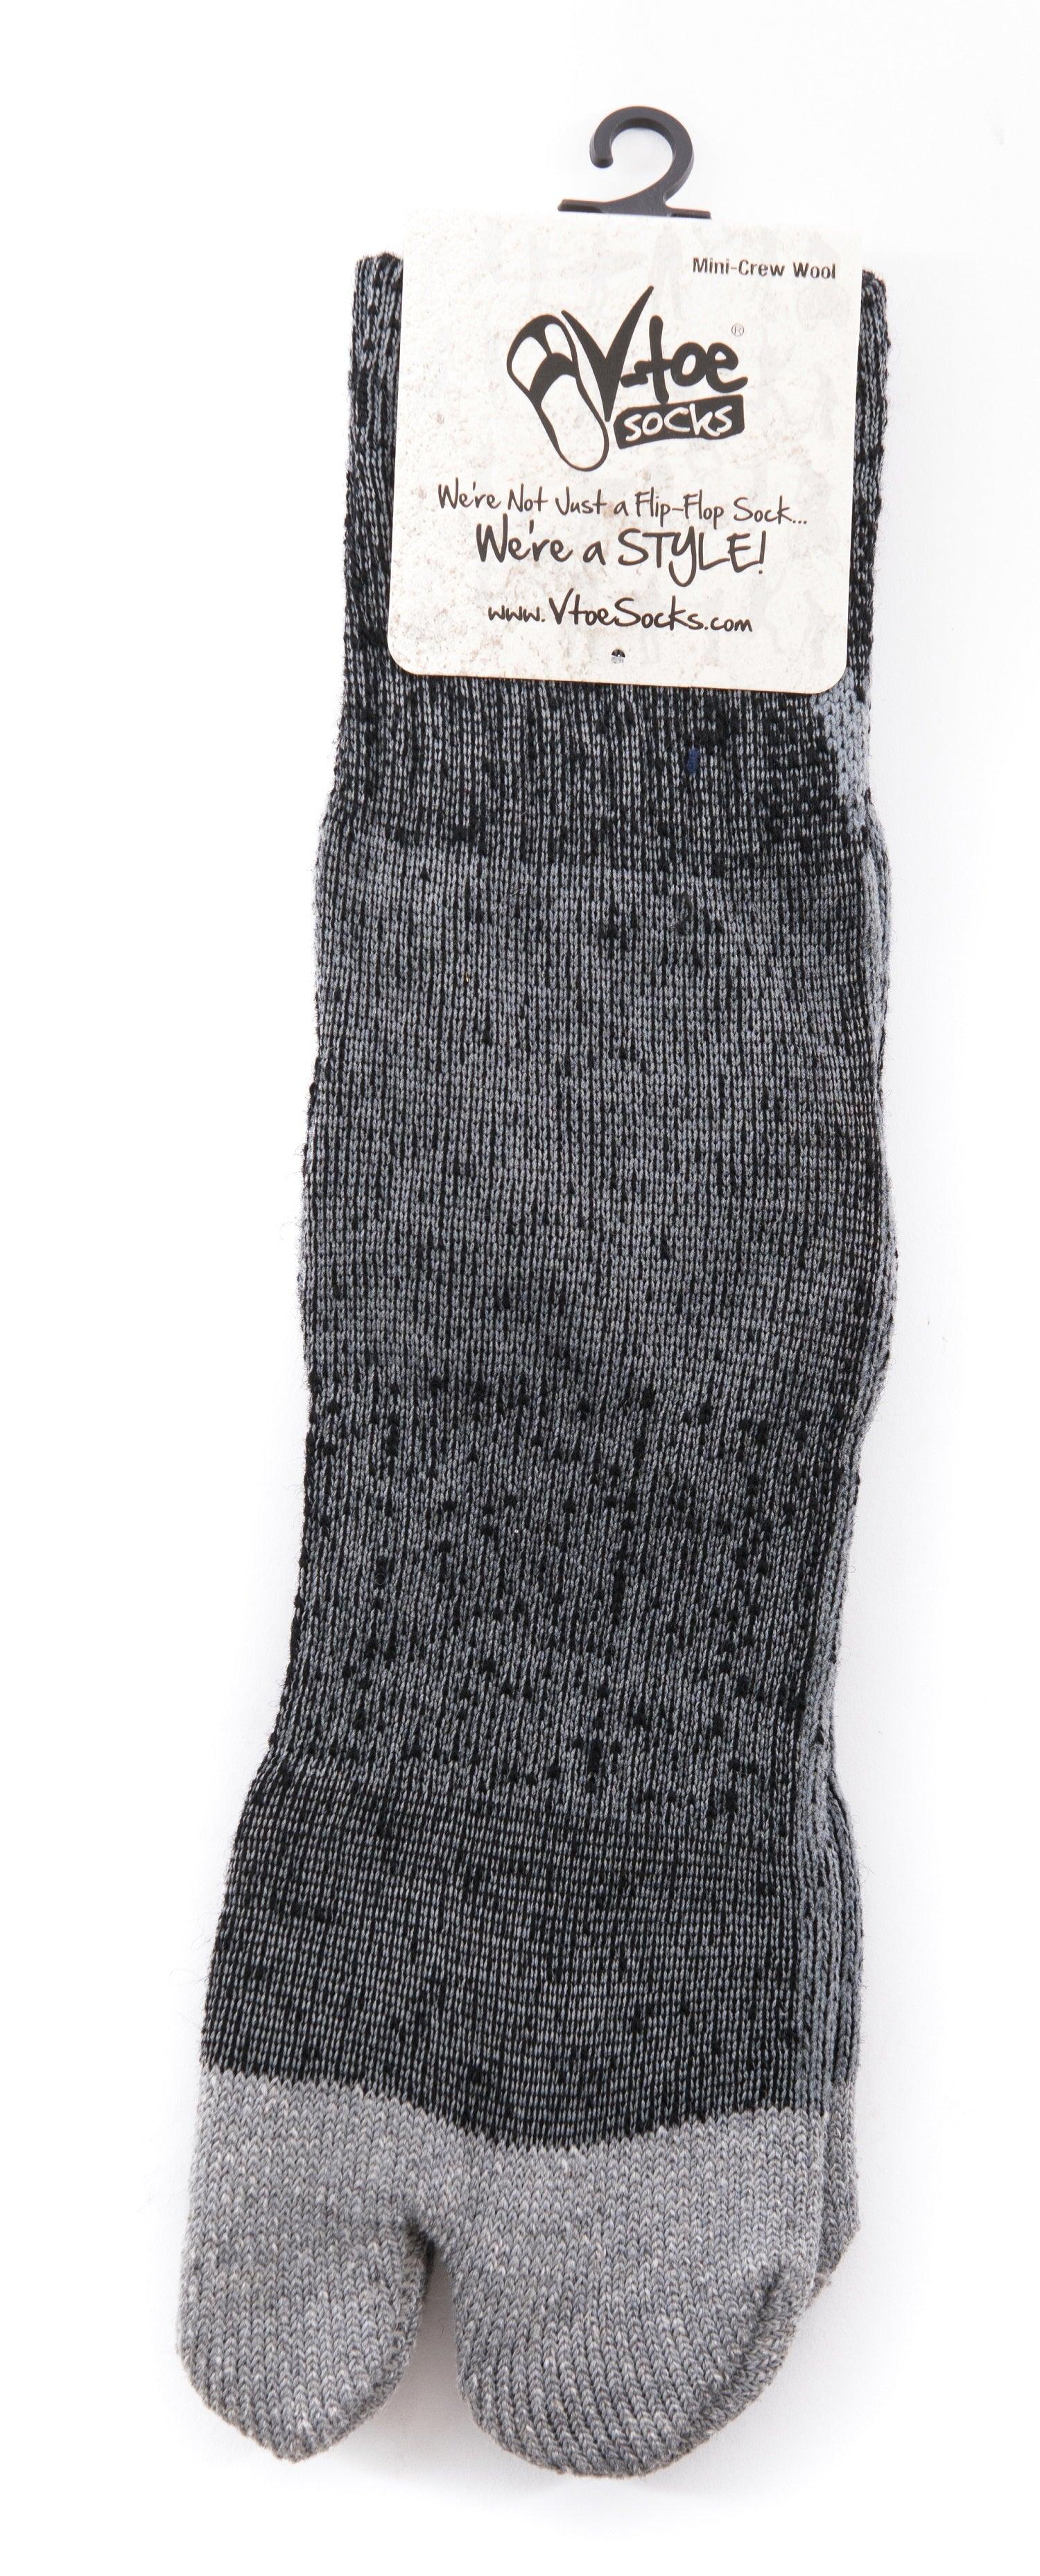 3 Pairs Charcoal Grey Wool Split Toe Tabi Socks For Hiking Or Casual by V-Toe Socks, Inc - The Hammer Sports